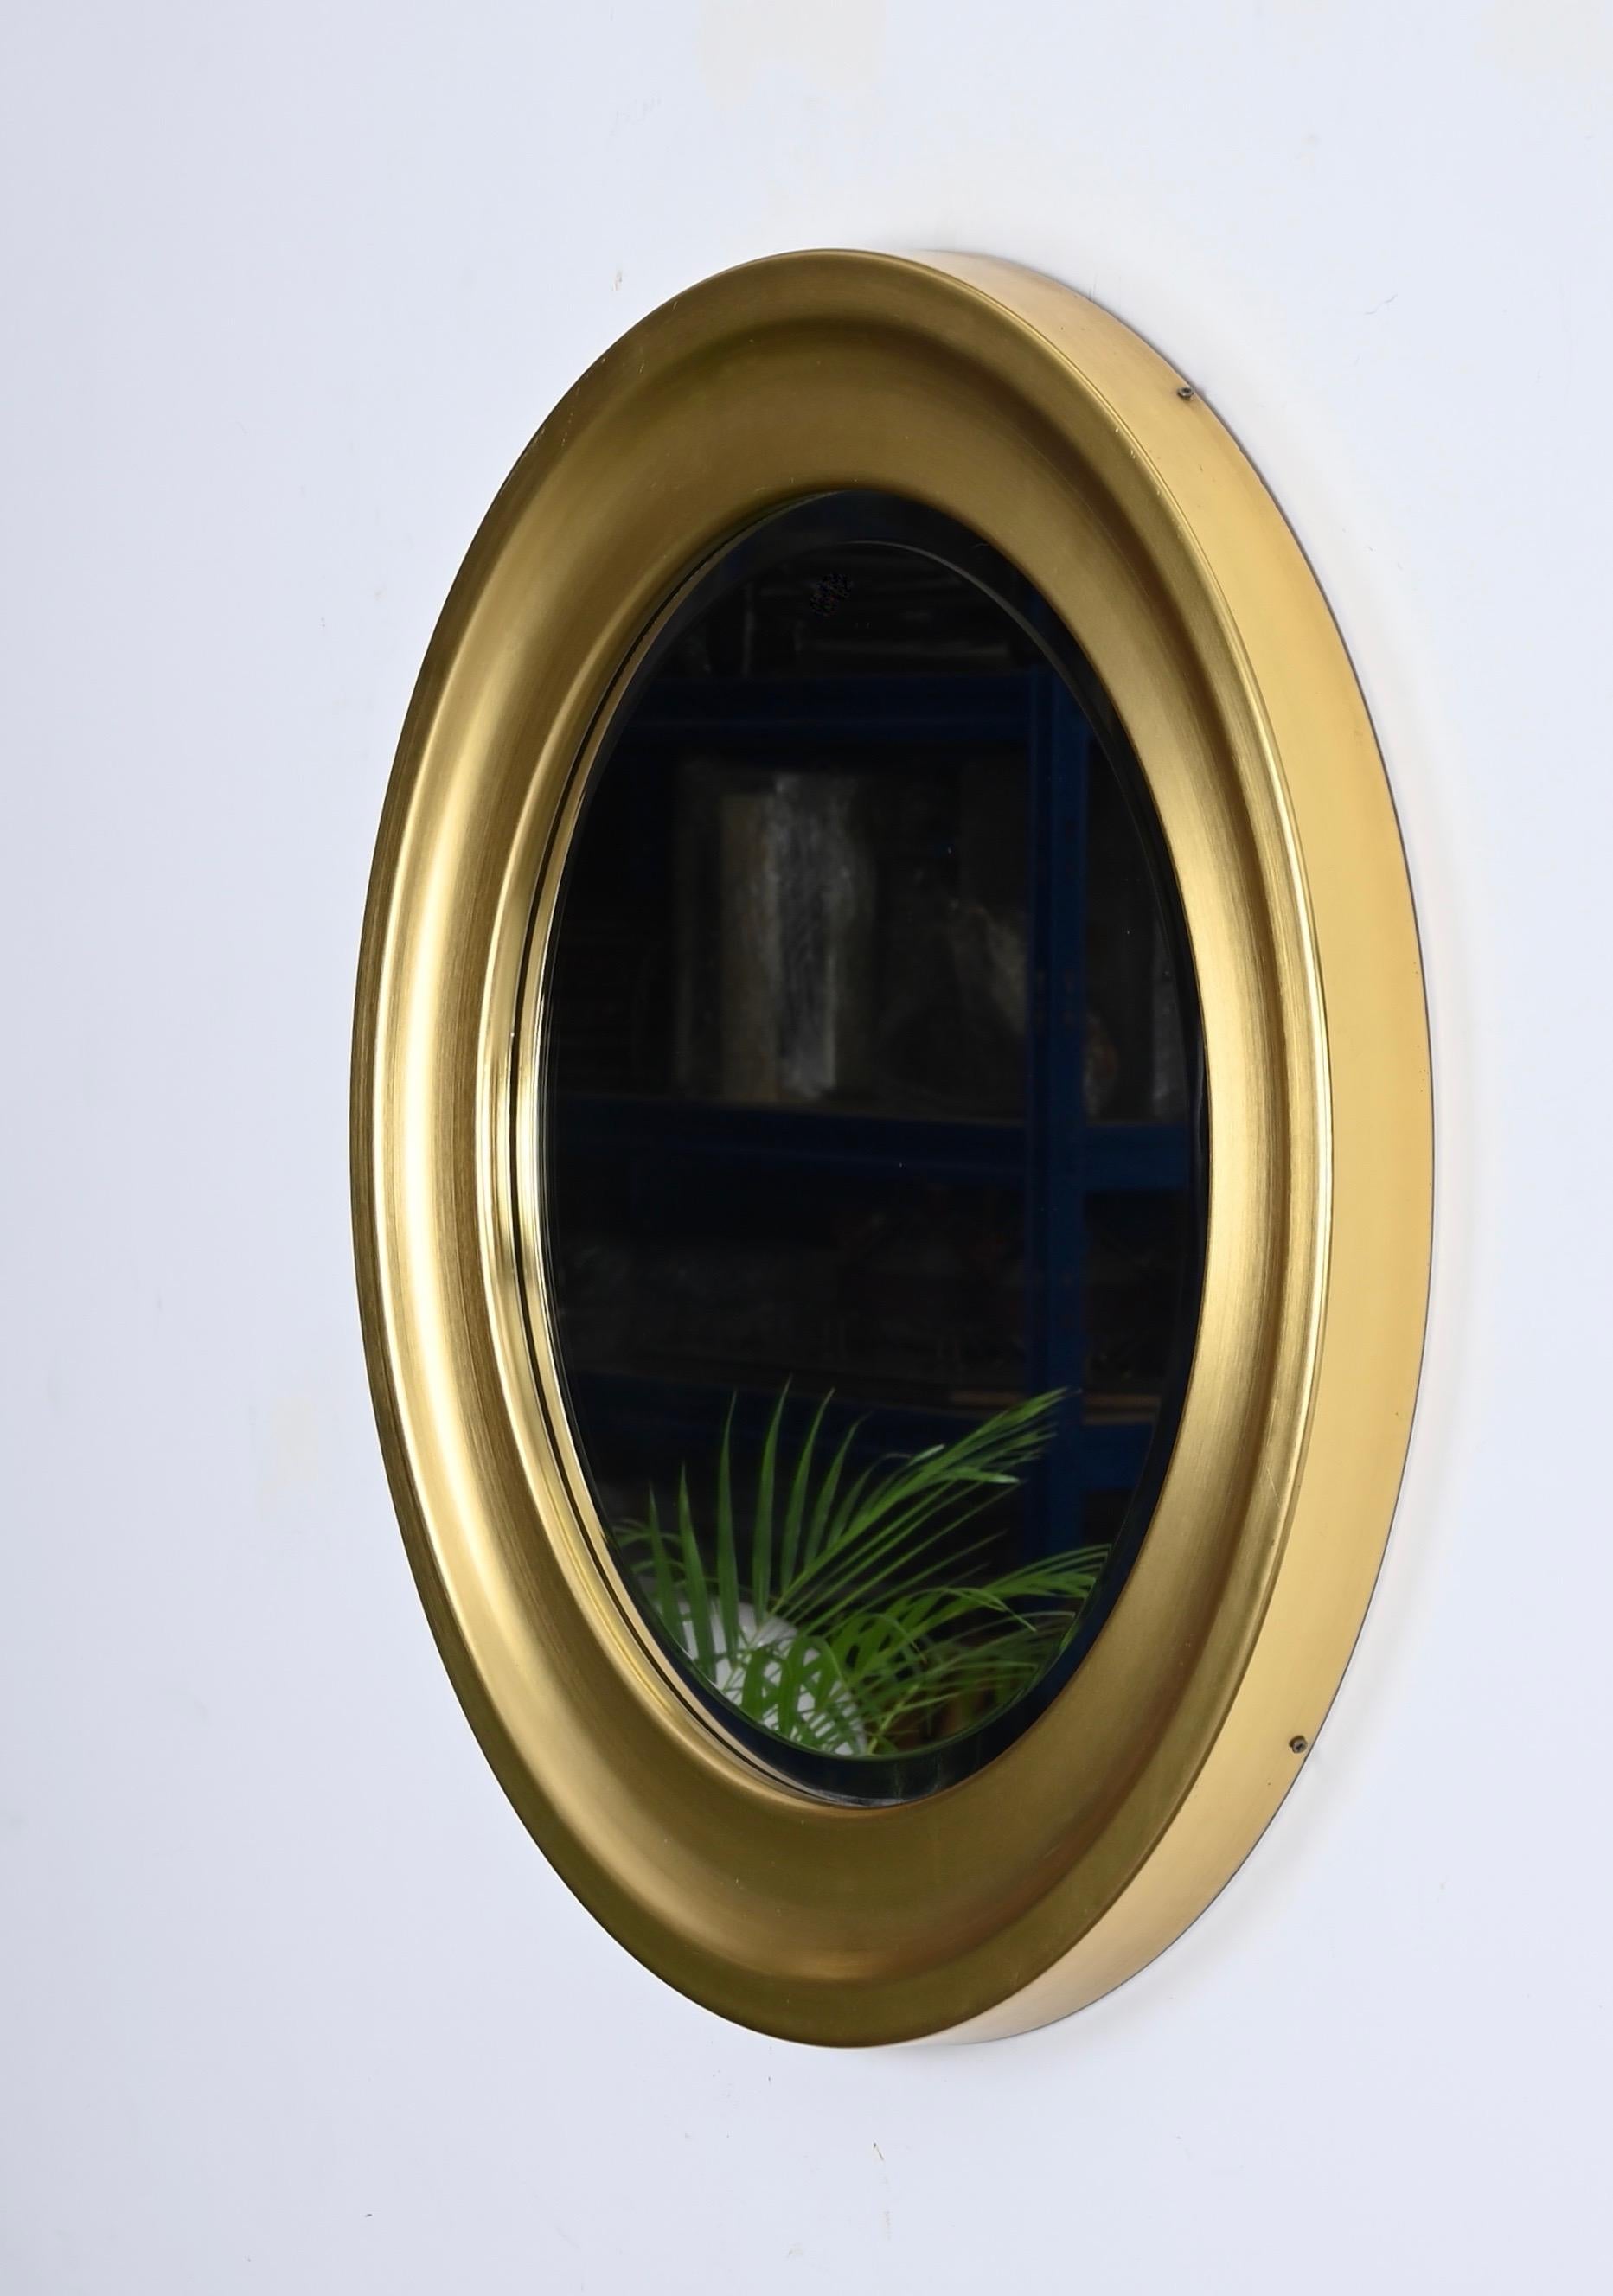 Sergio Mazza Midcentury Golden Aluminum Round Mirror for Artemide, Italy 1960s For Sale 4